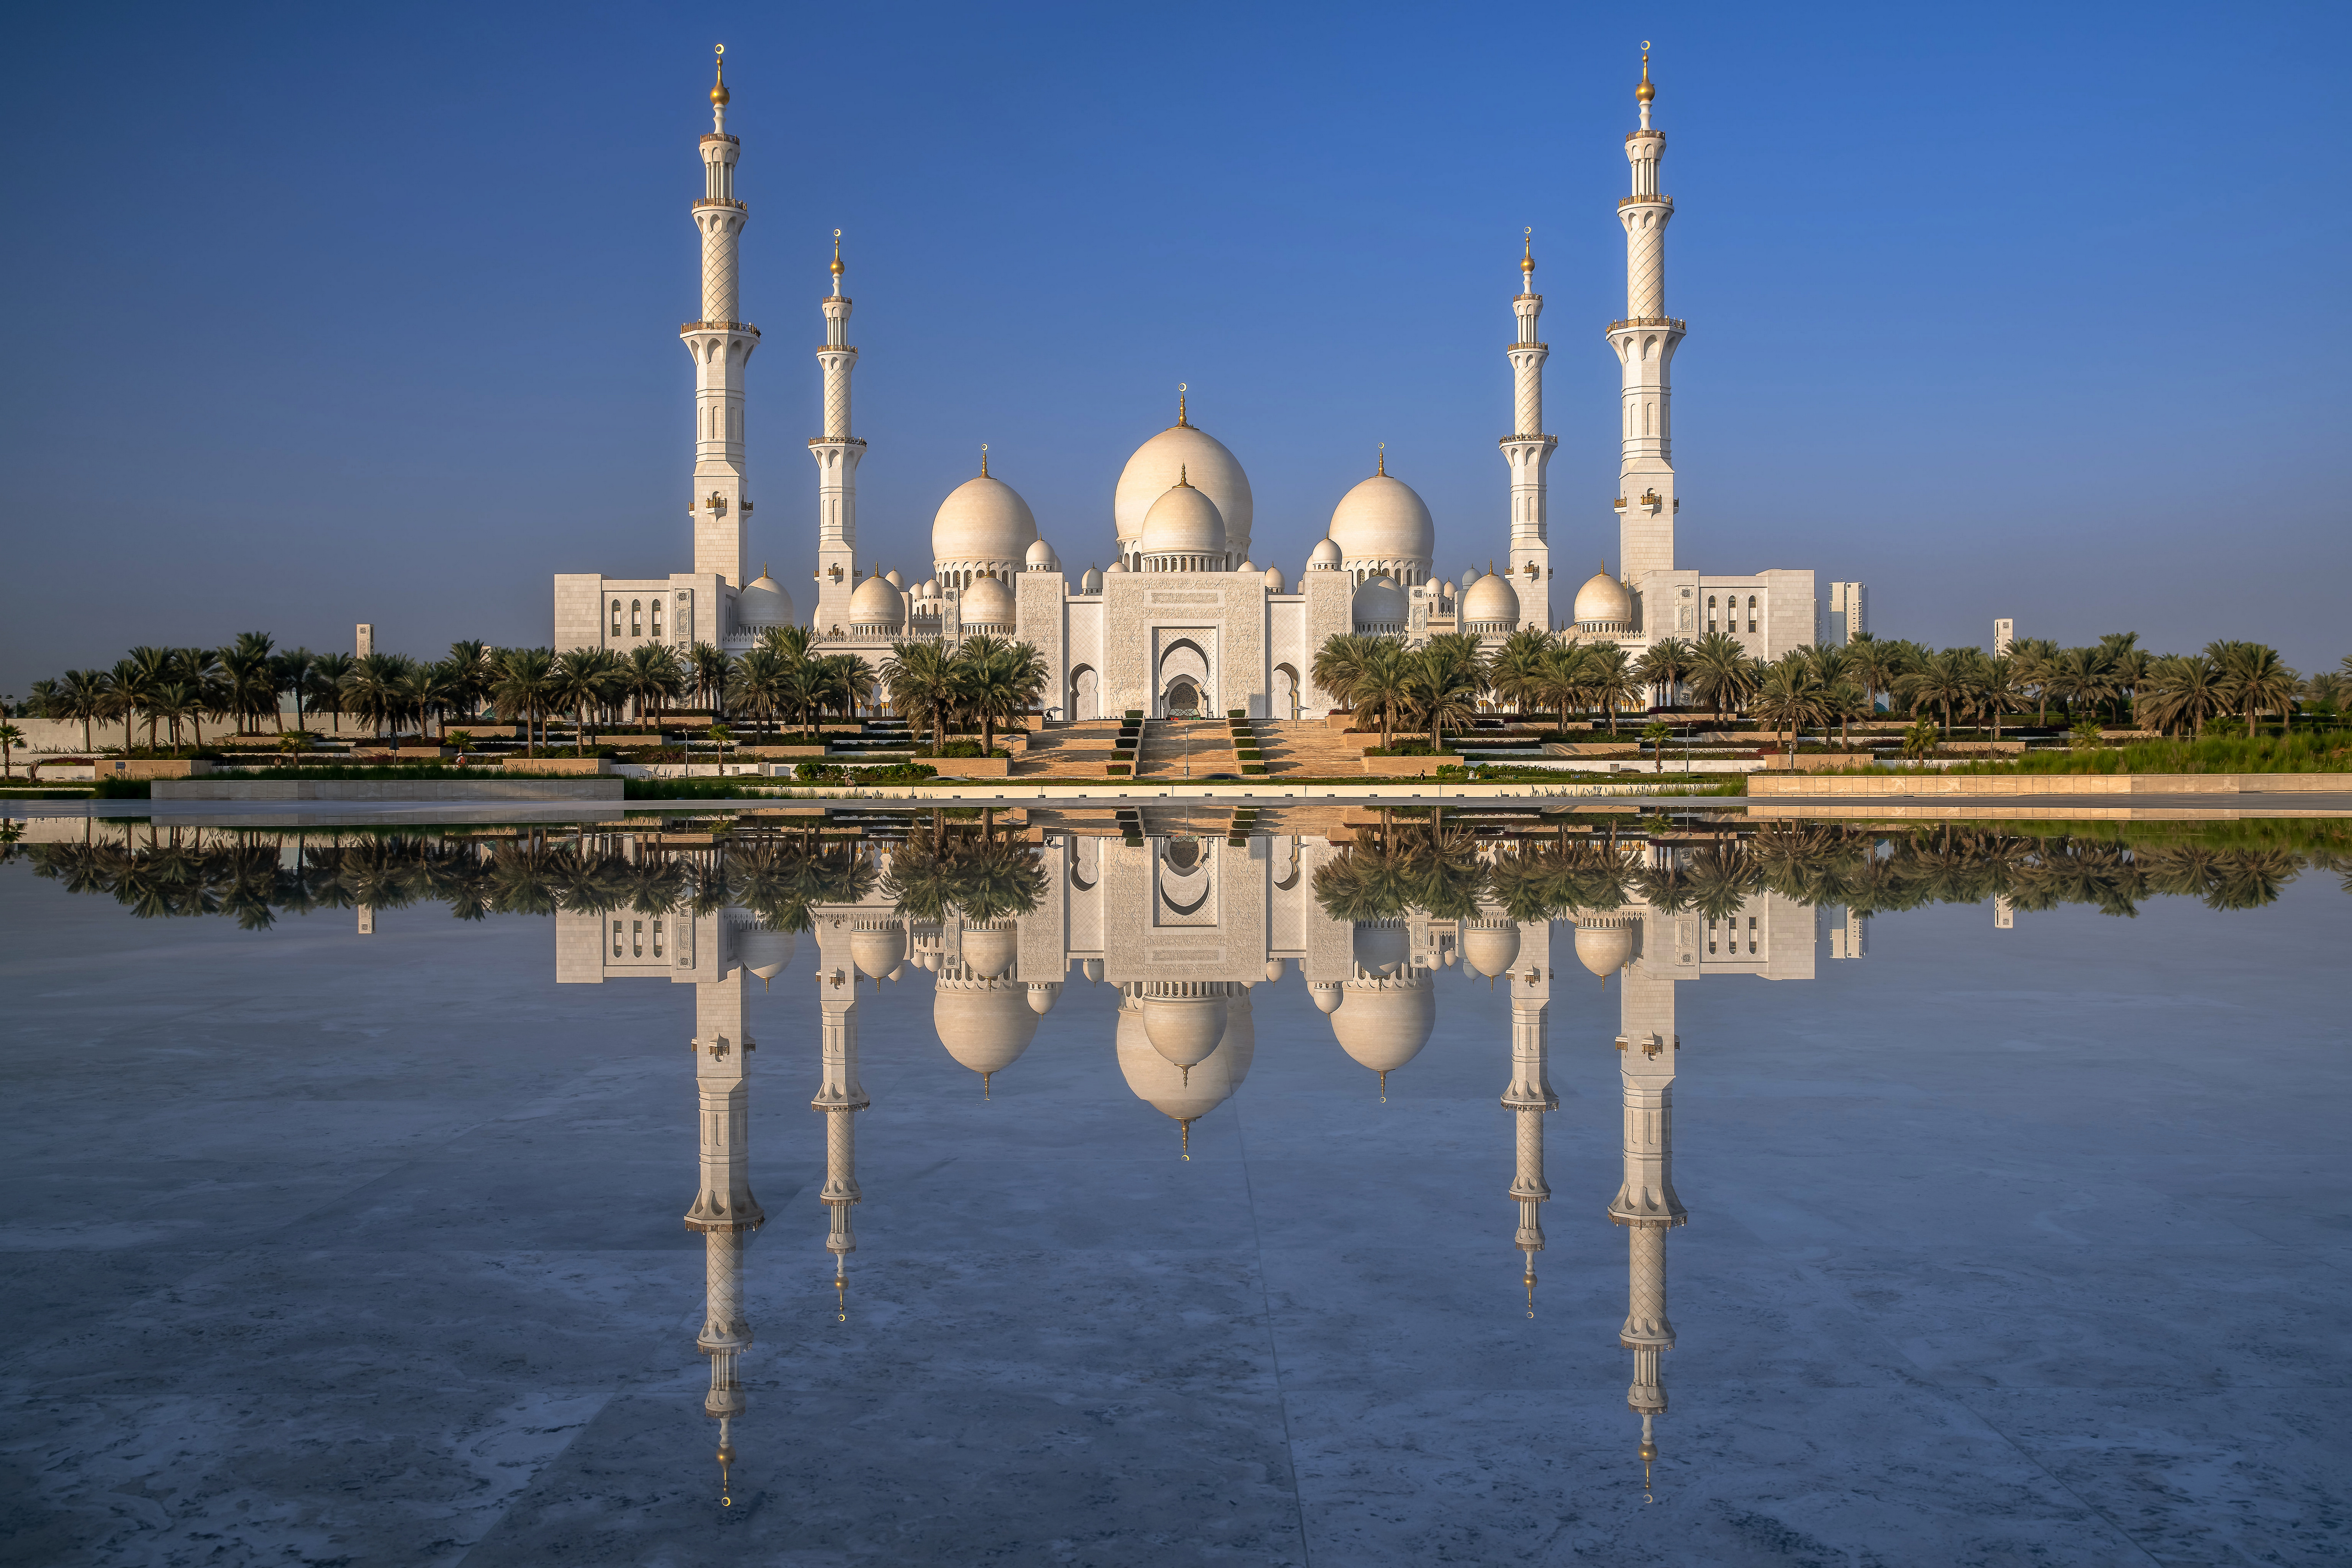 5120x3413、アラブ首長国連邦、モスク、Sheikh Zayed Grand Mosque, Abu Dhabi、倒影、都市、